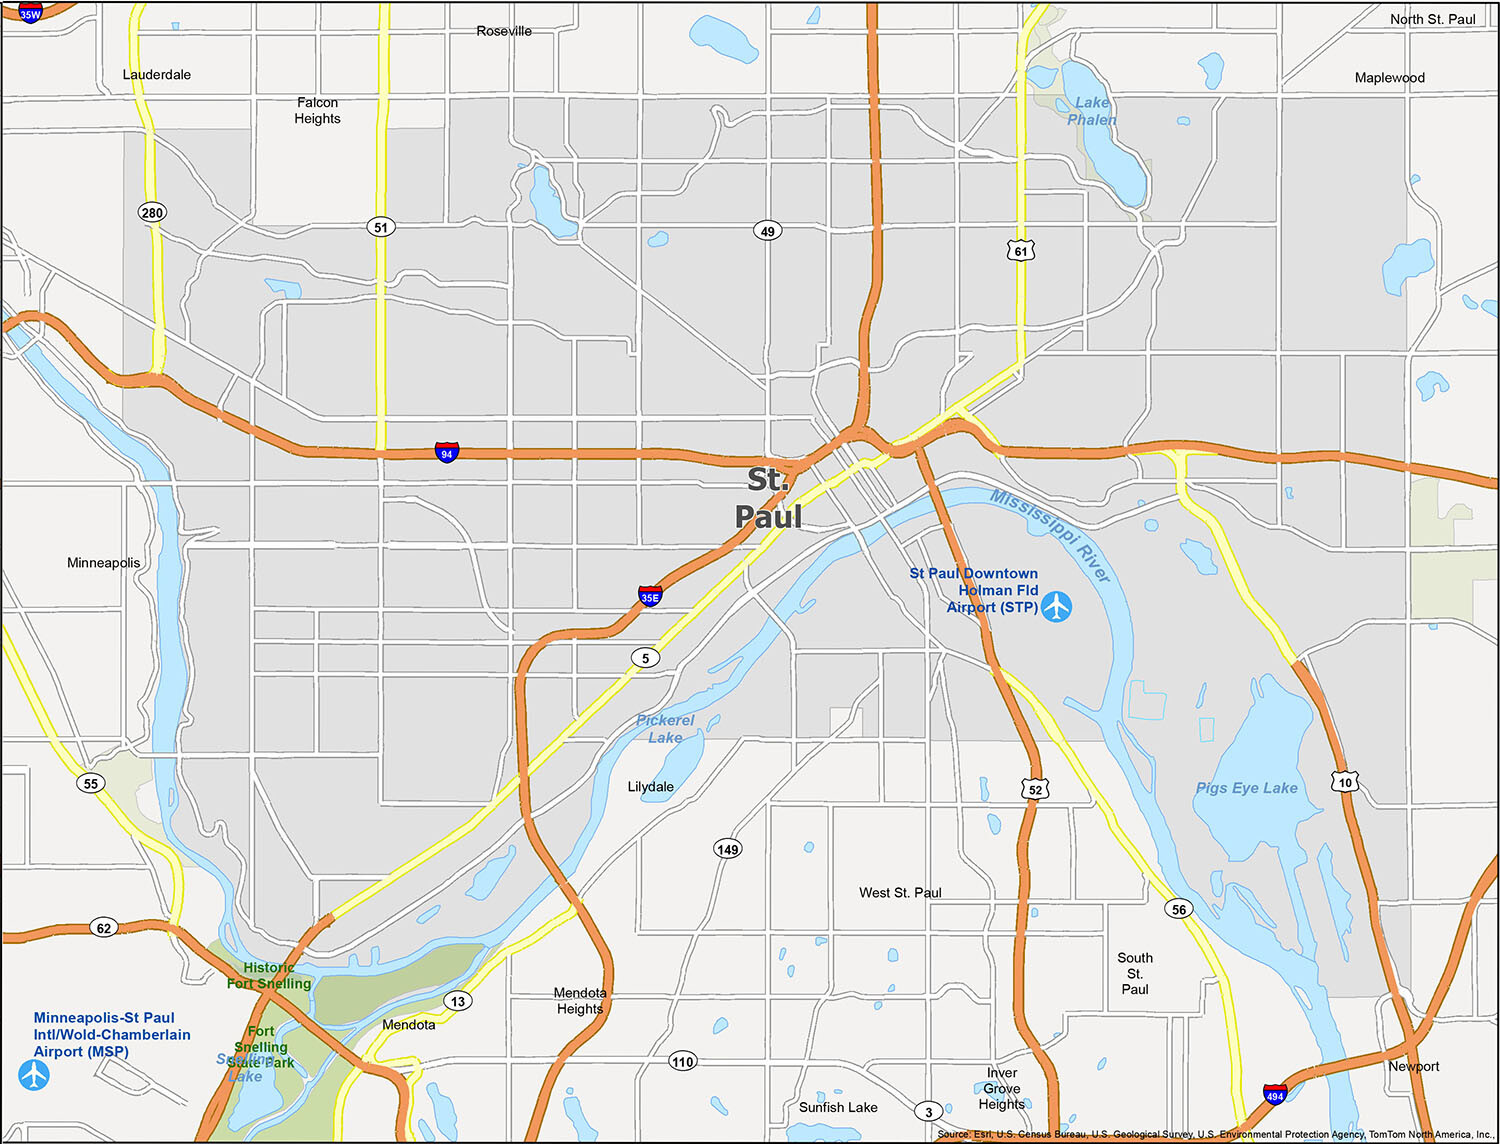 St. Paul Minnesota Street Map 2758000